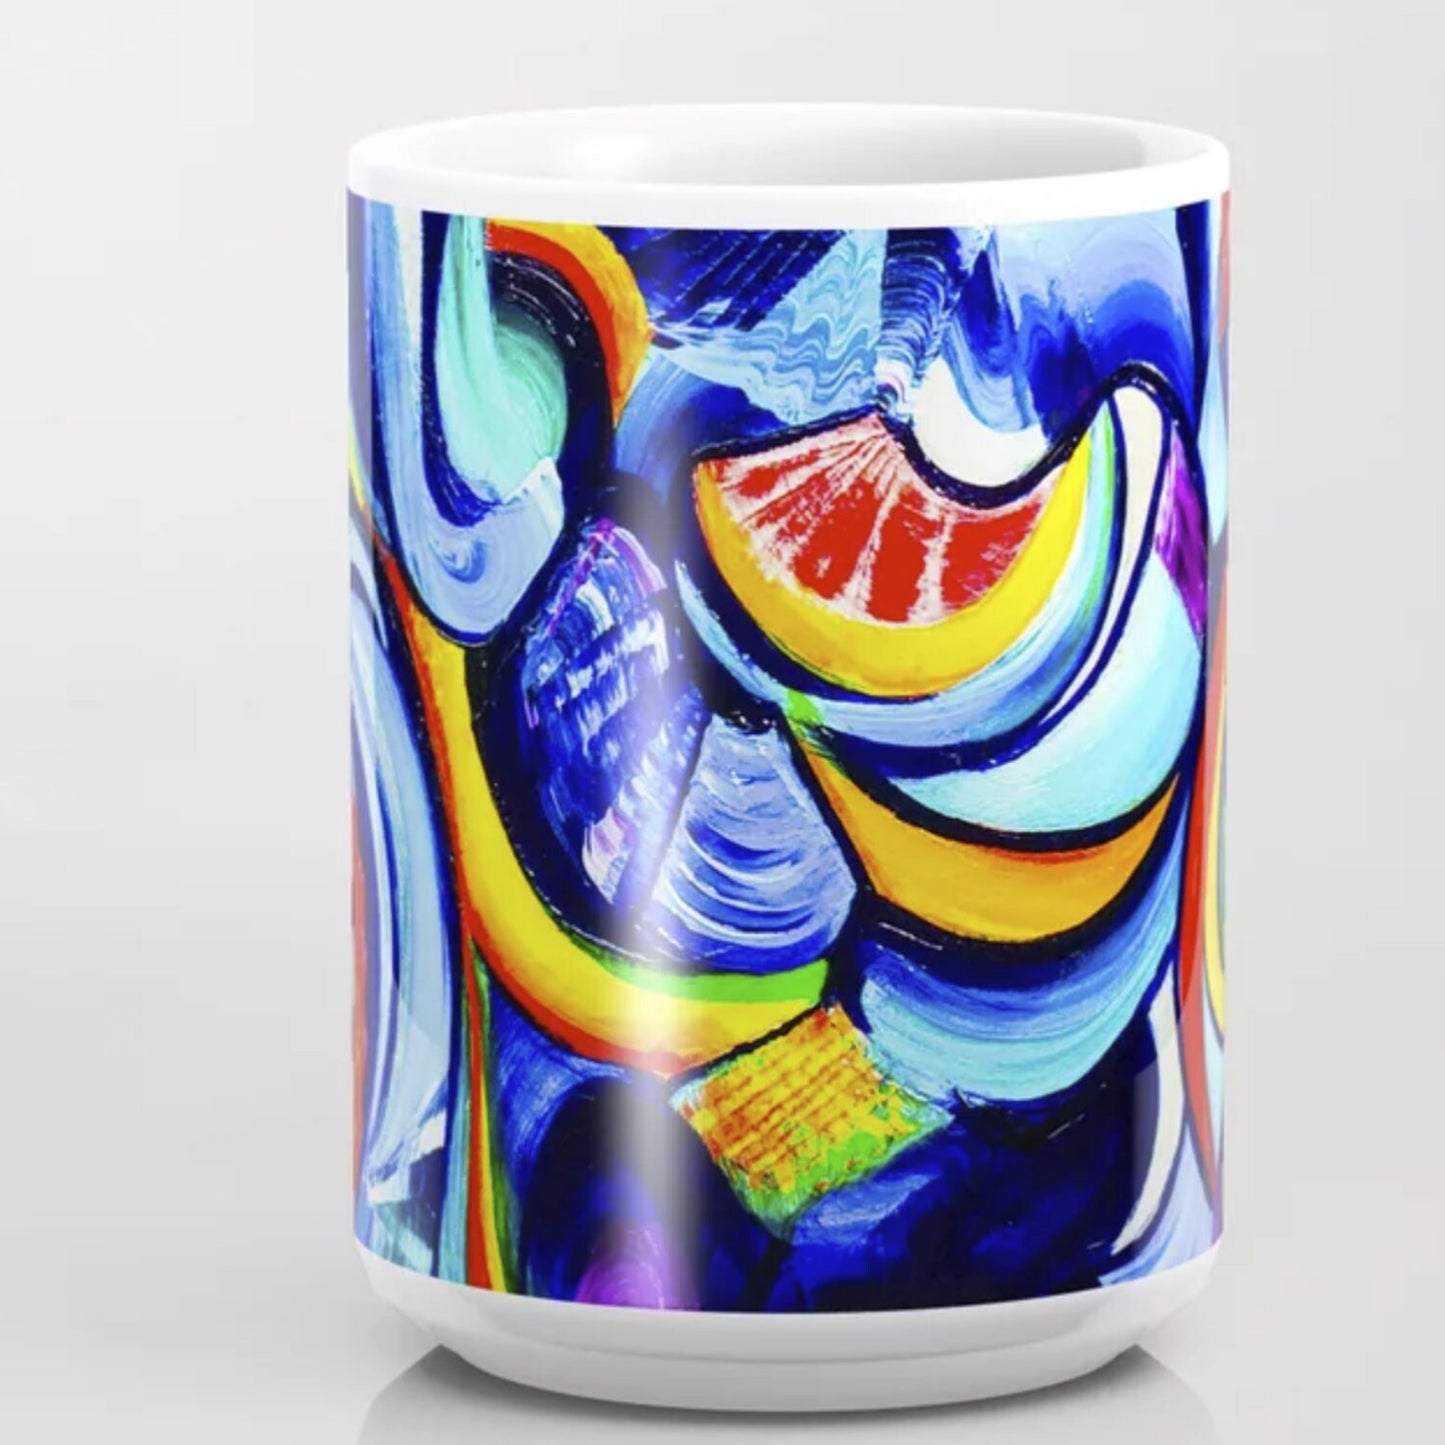 Colorful Abstract Mug Unique Artsy Gift for Art Lovers 15oz cheap gift Abstract Art Colorful Mugs graffiti mug psychadelic